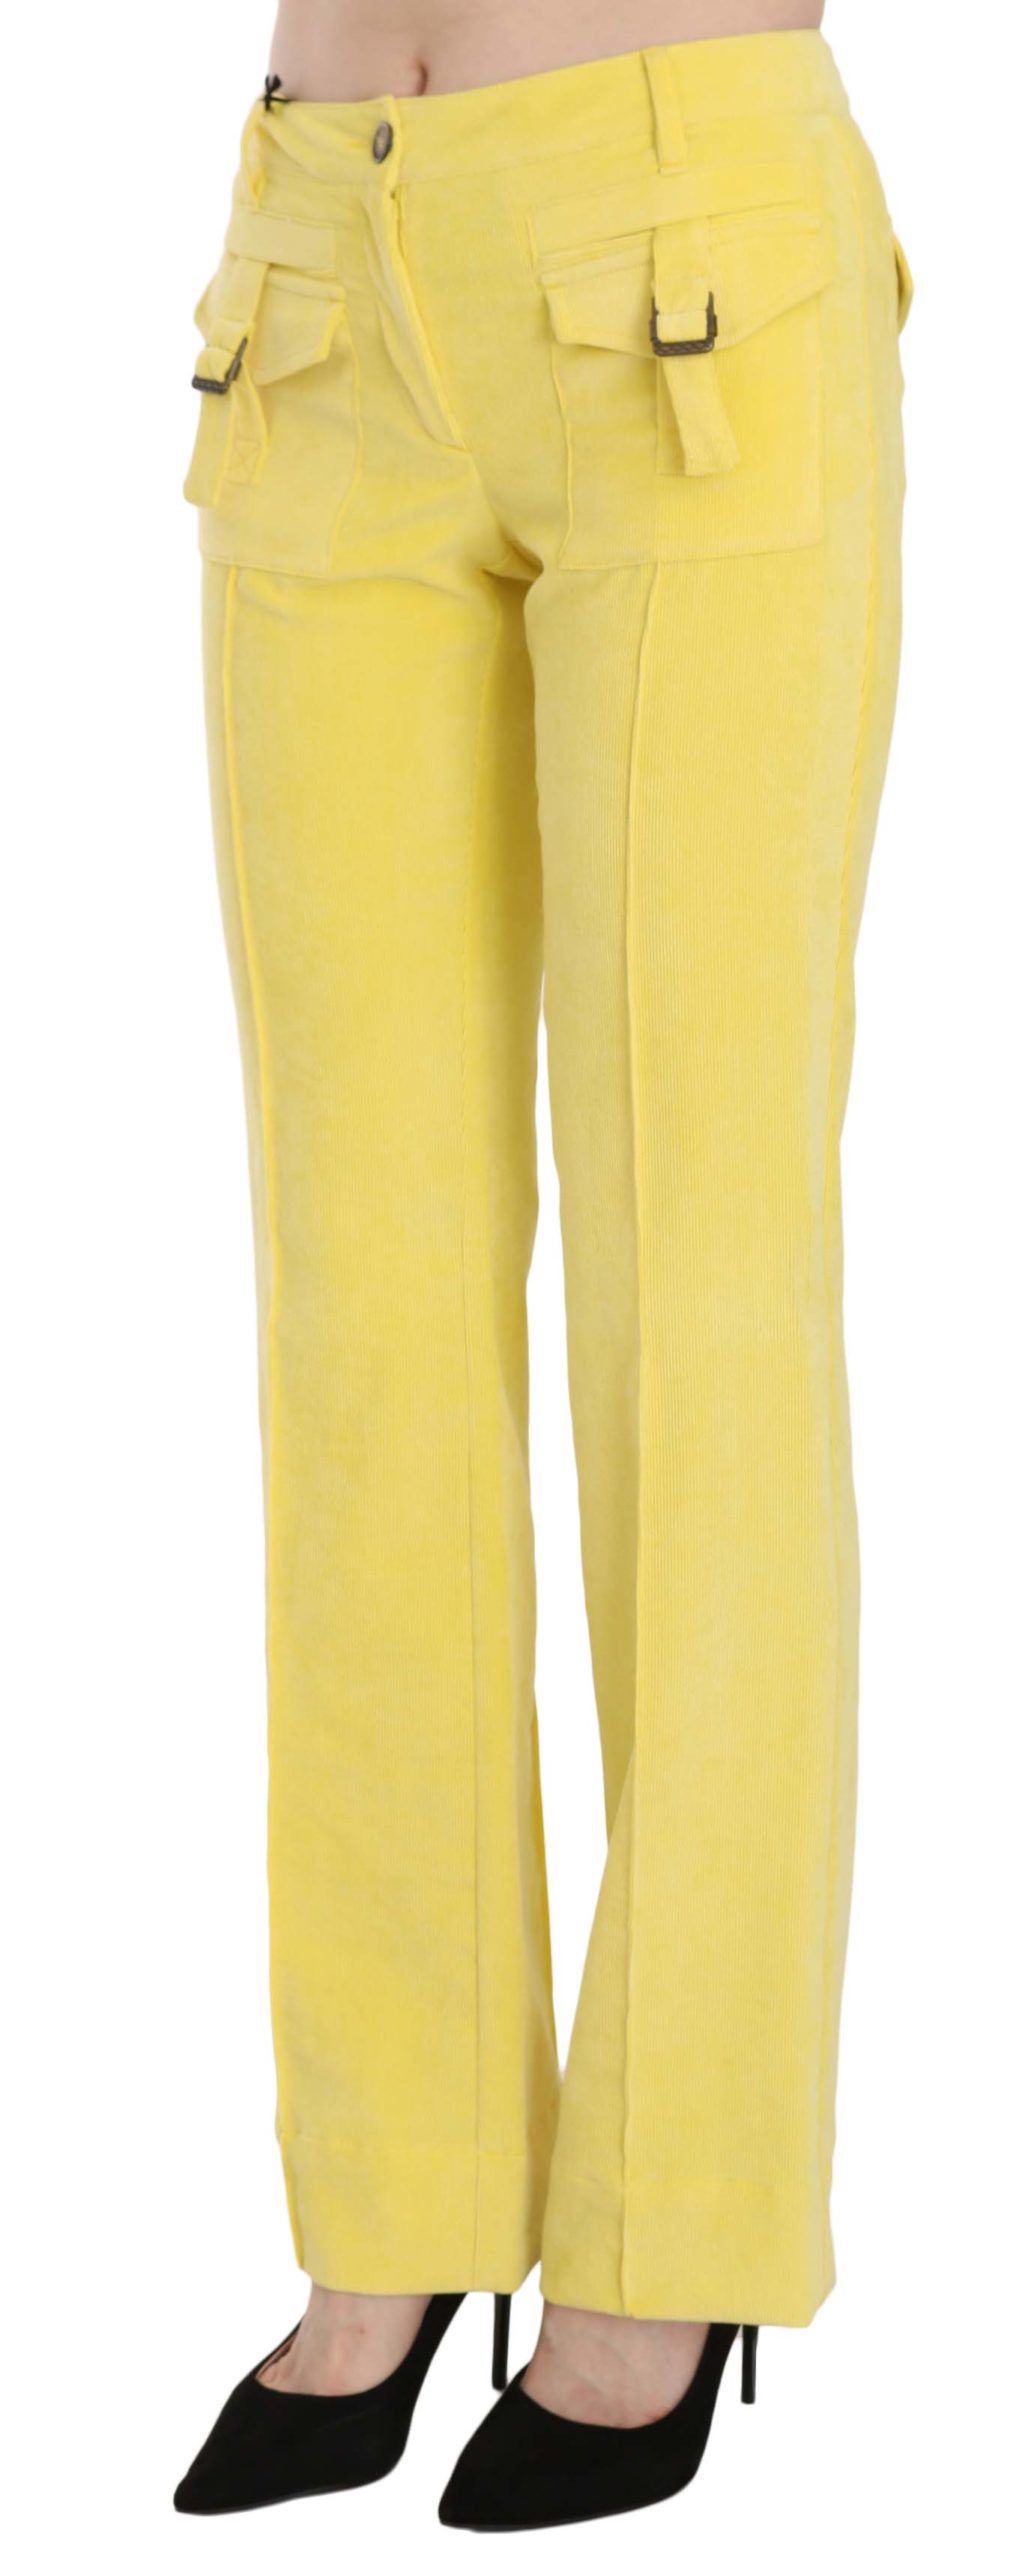 Chic Yellow Corduroy Mid Waist Pants